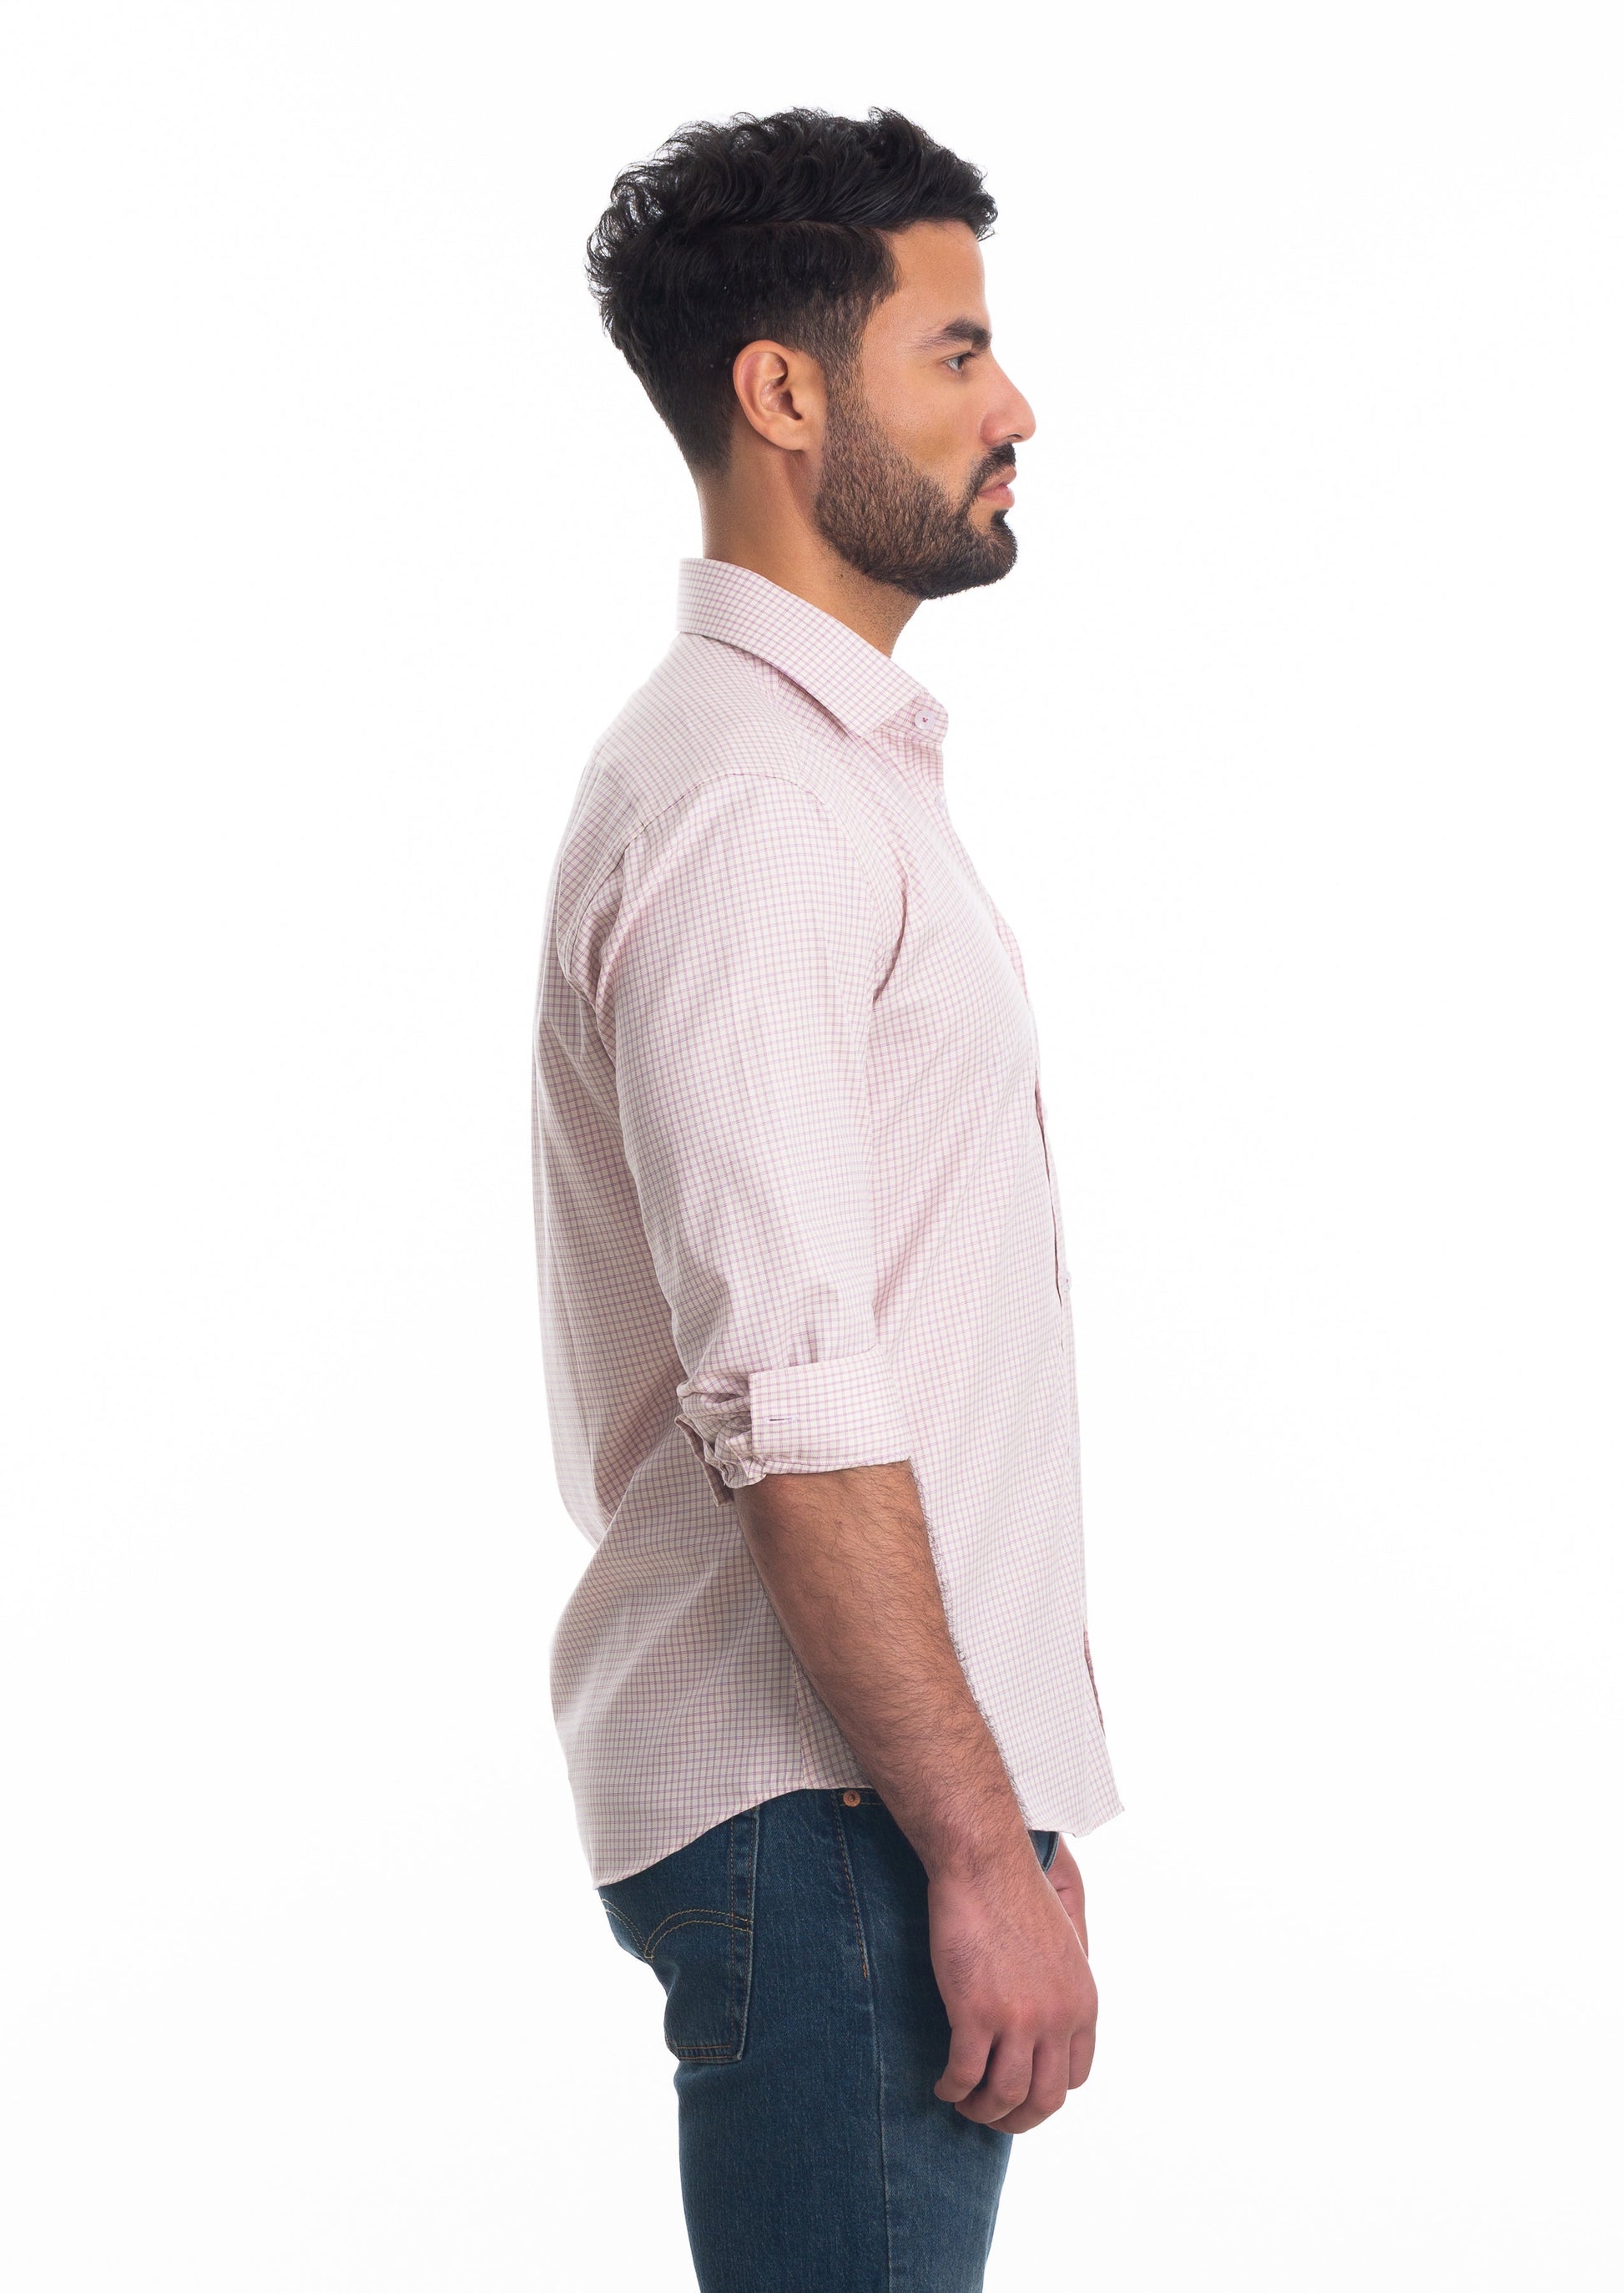 White + Light Pink Long Sleeve Shirt T-6808 Side